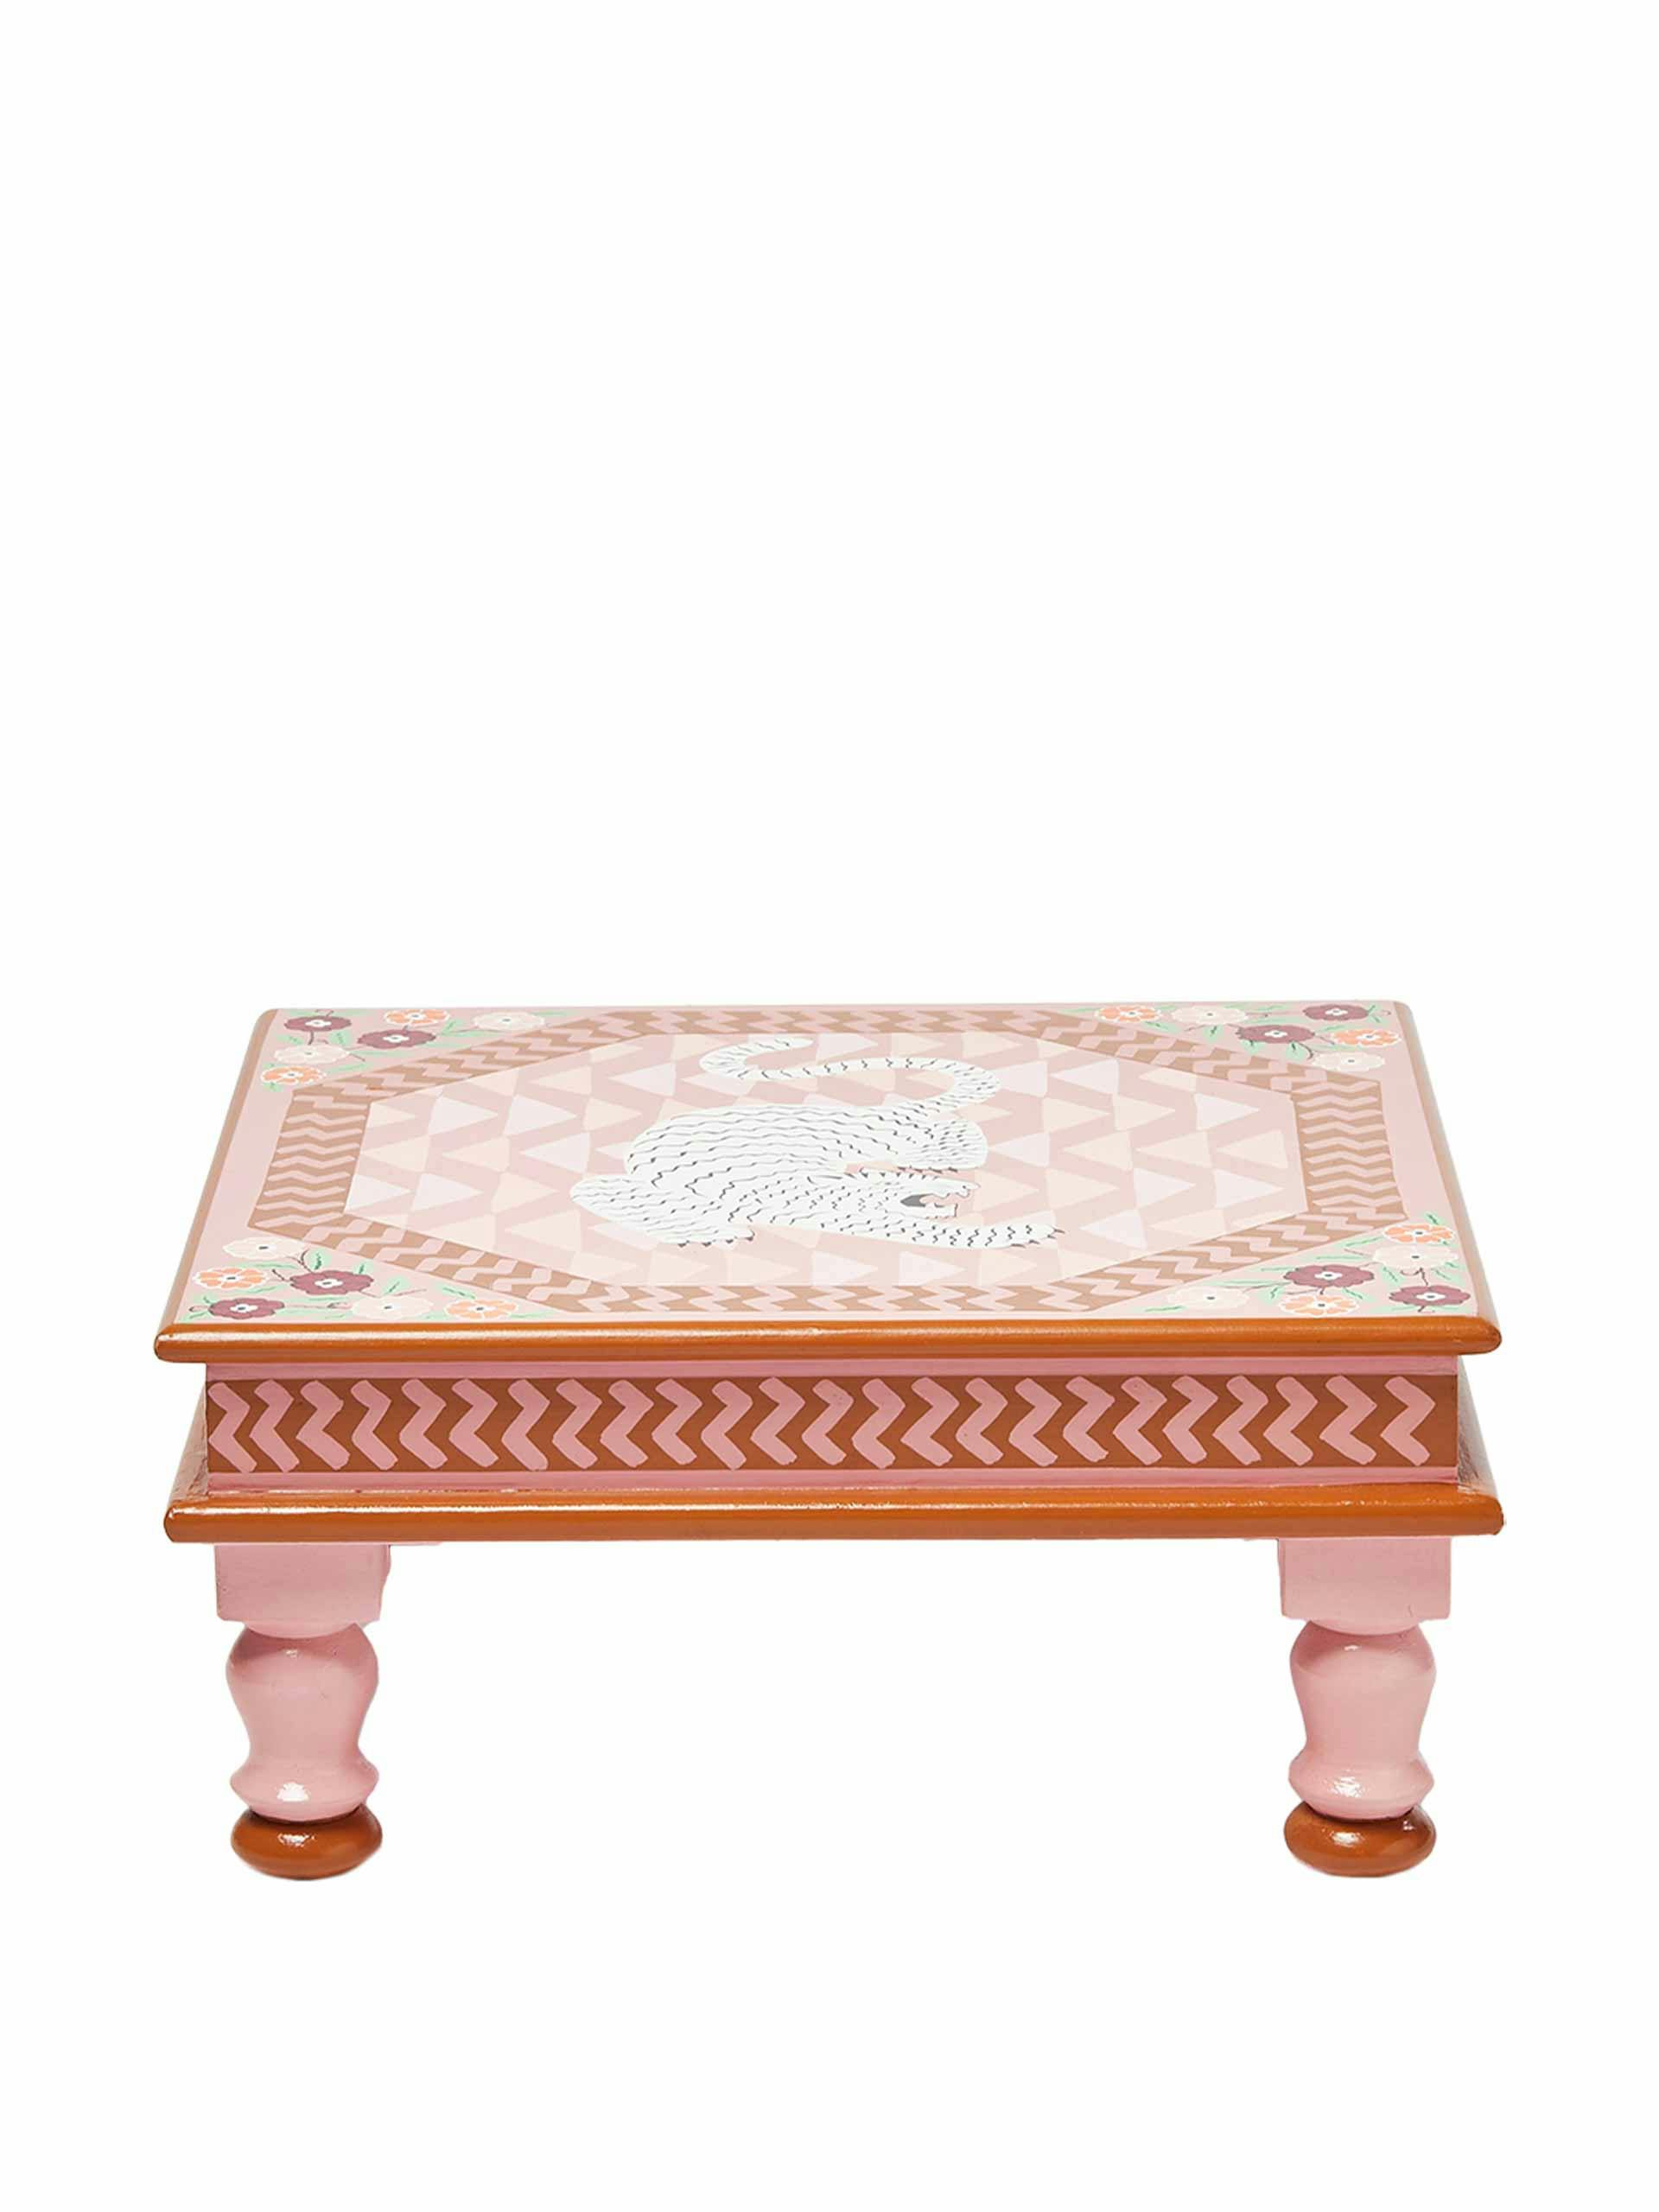 Tigris bajot pink wood side table